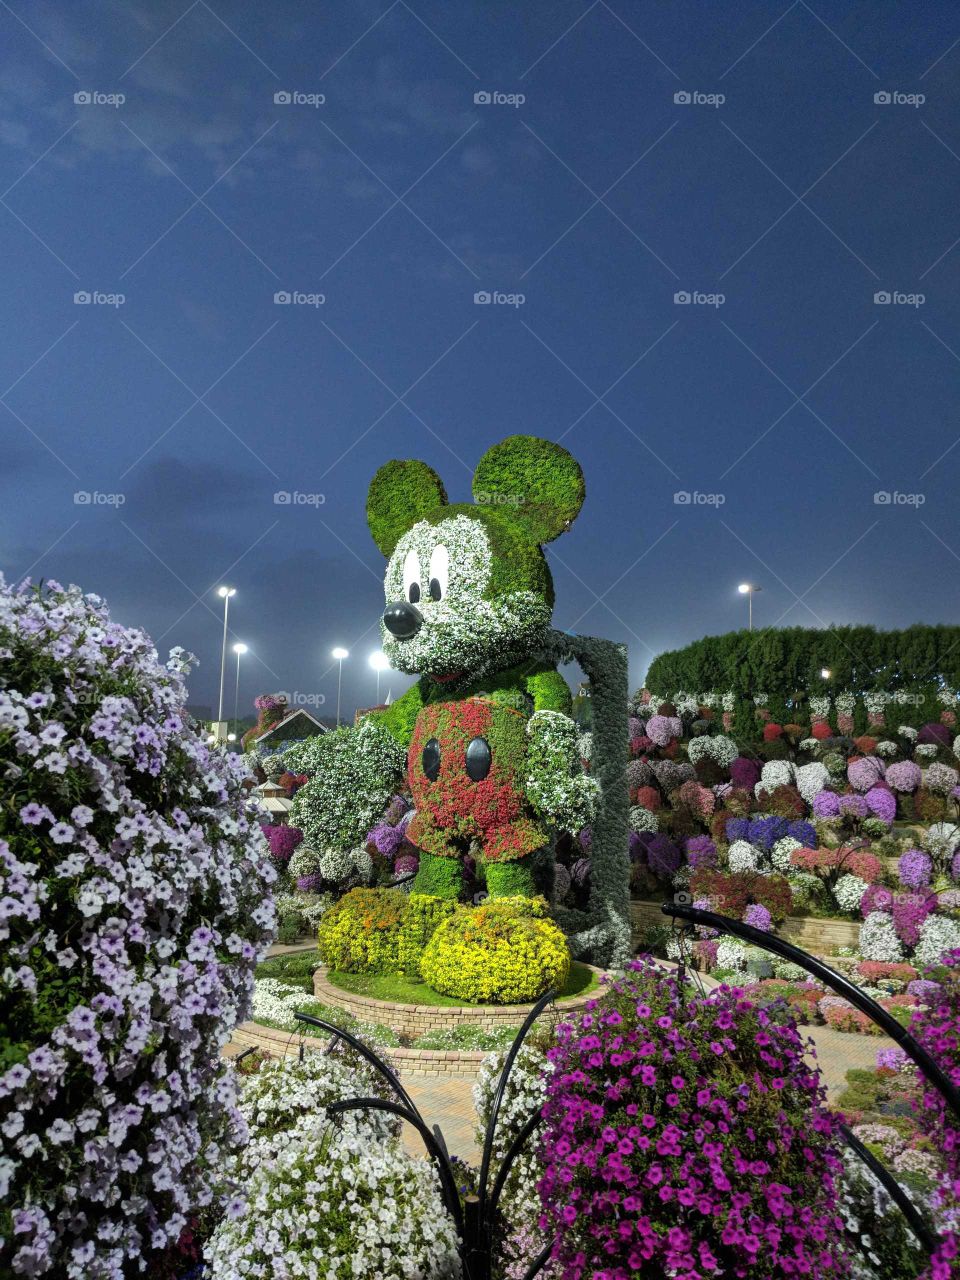 Mickey Mouse in Dubai